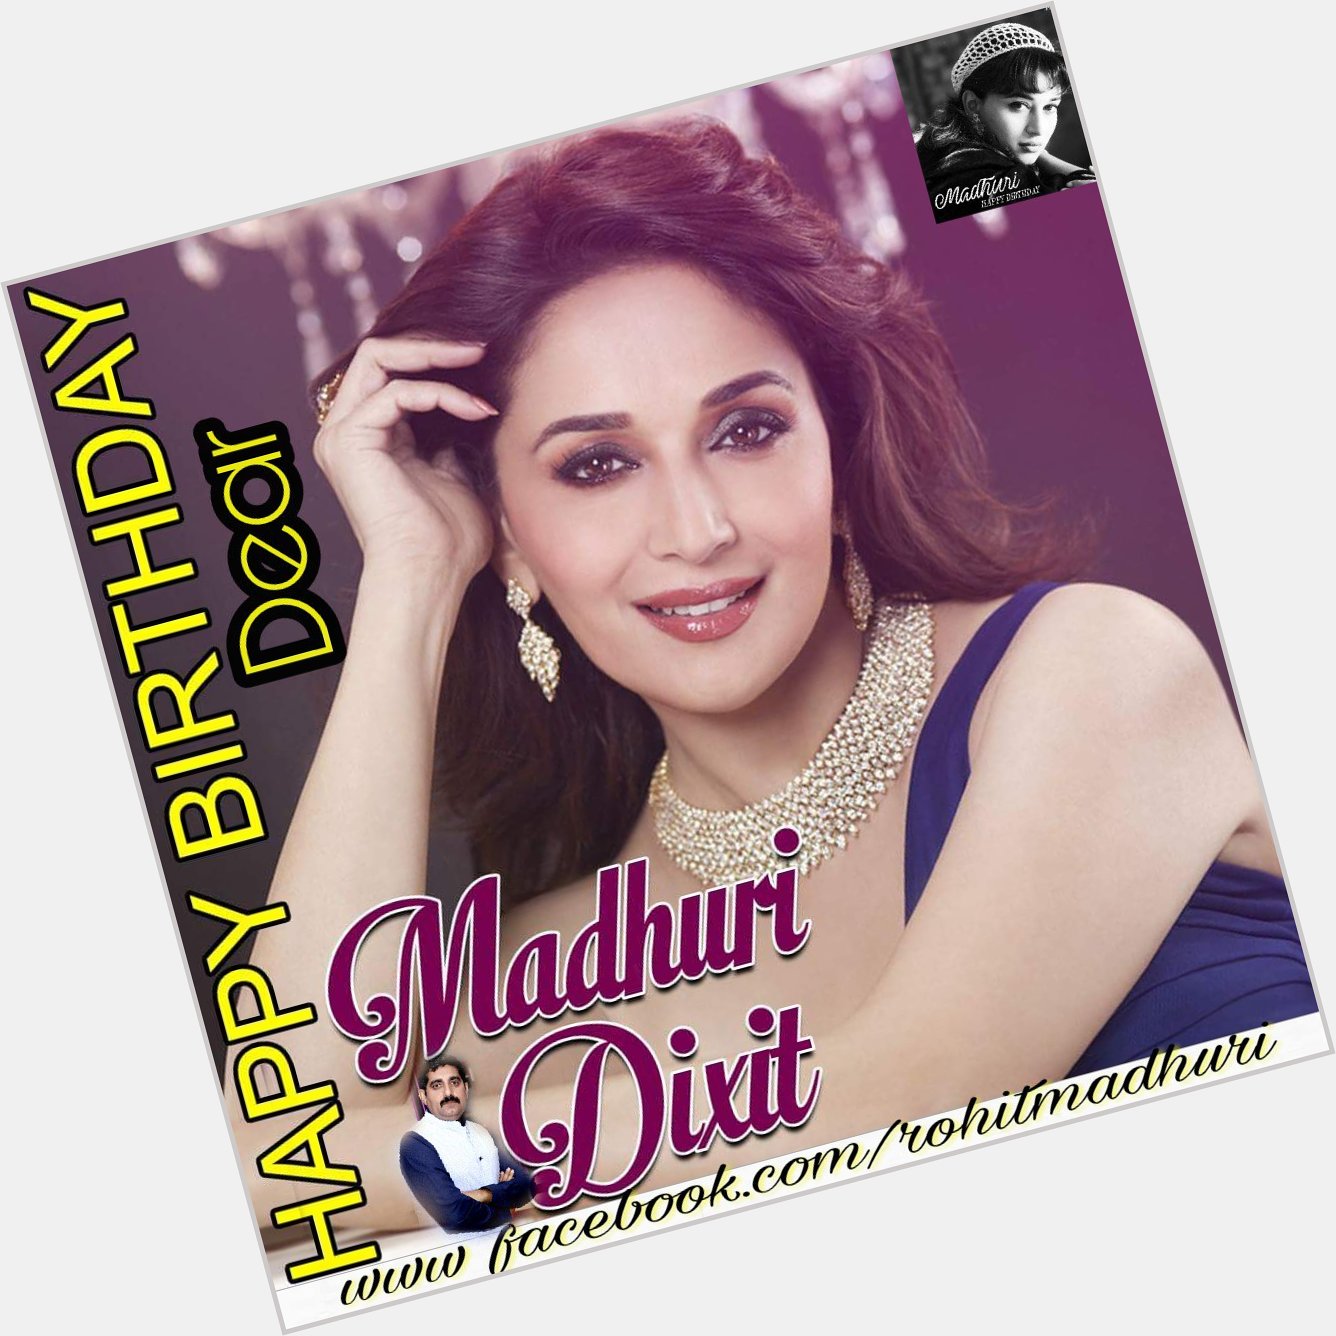 Wishing the Gorgeous Madhuri Dixit - A Very Happy Birthday !!
I am a die hrt  fan of u 